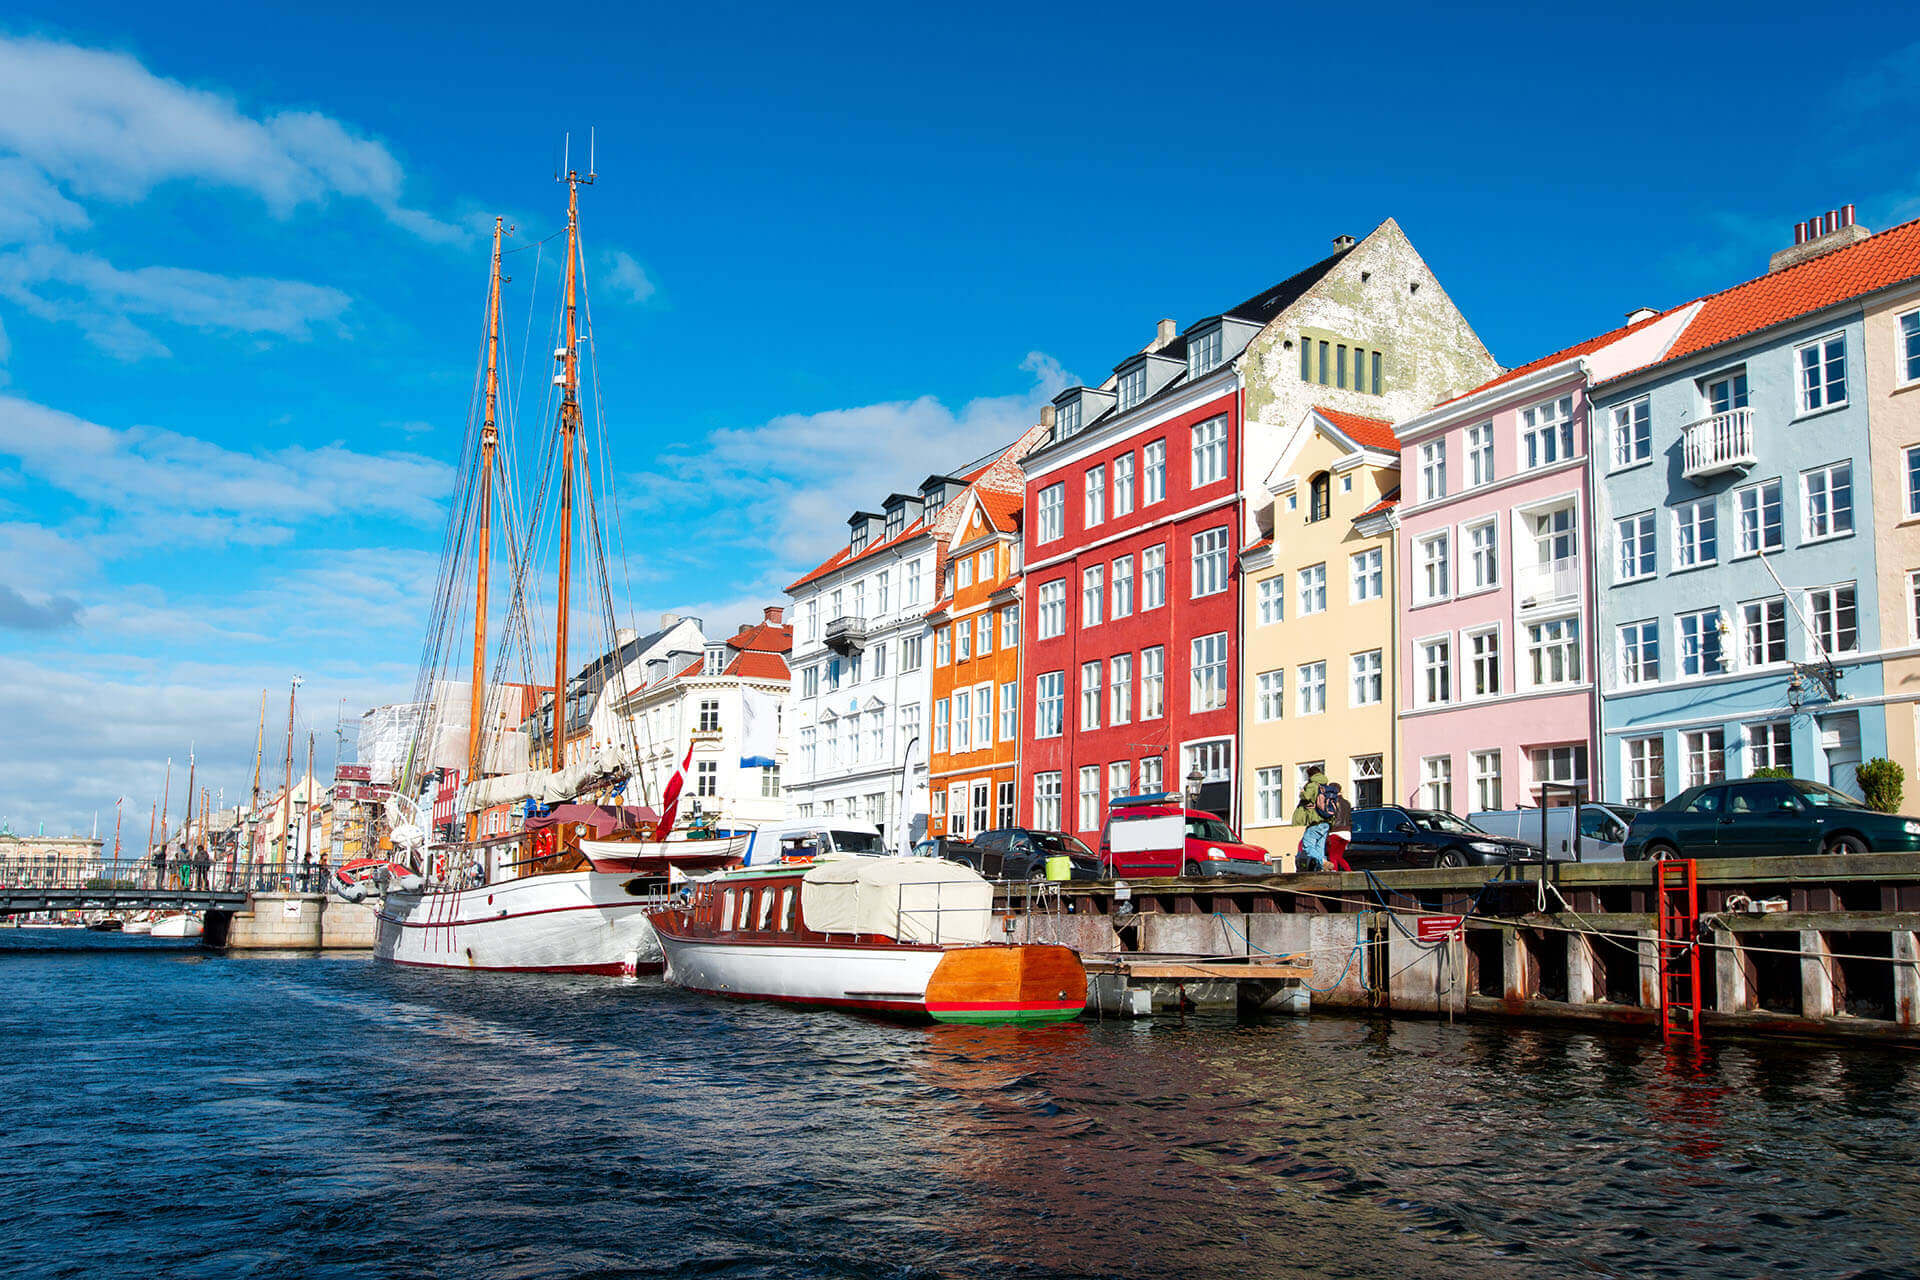 Denmark: Longer Processing Times for Several Categories